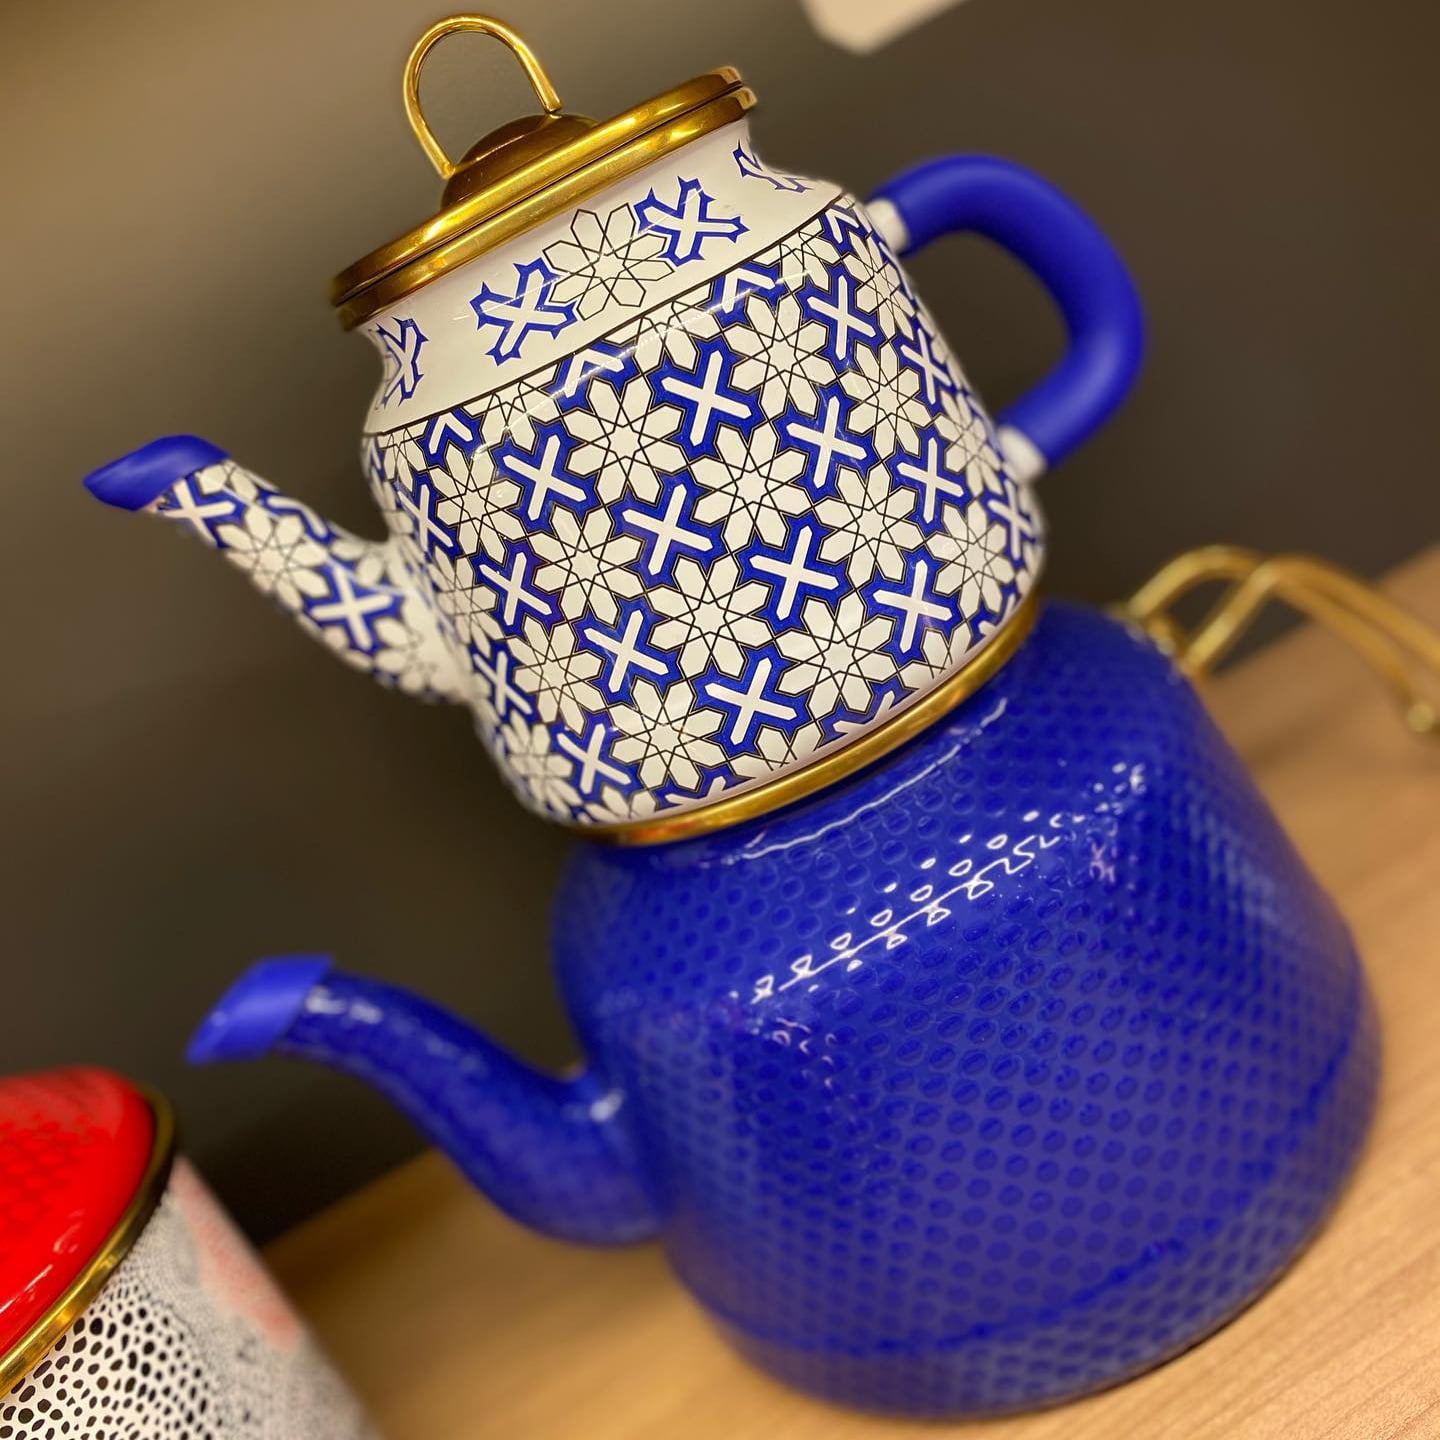 Vintage Small Blue Tea Kettle, Blue Enamelware, Tea Kettle, Antique Tea  Kettle, Small Teapot, Stovetop Kettle, Vintage Tea Kettle. 